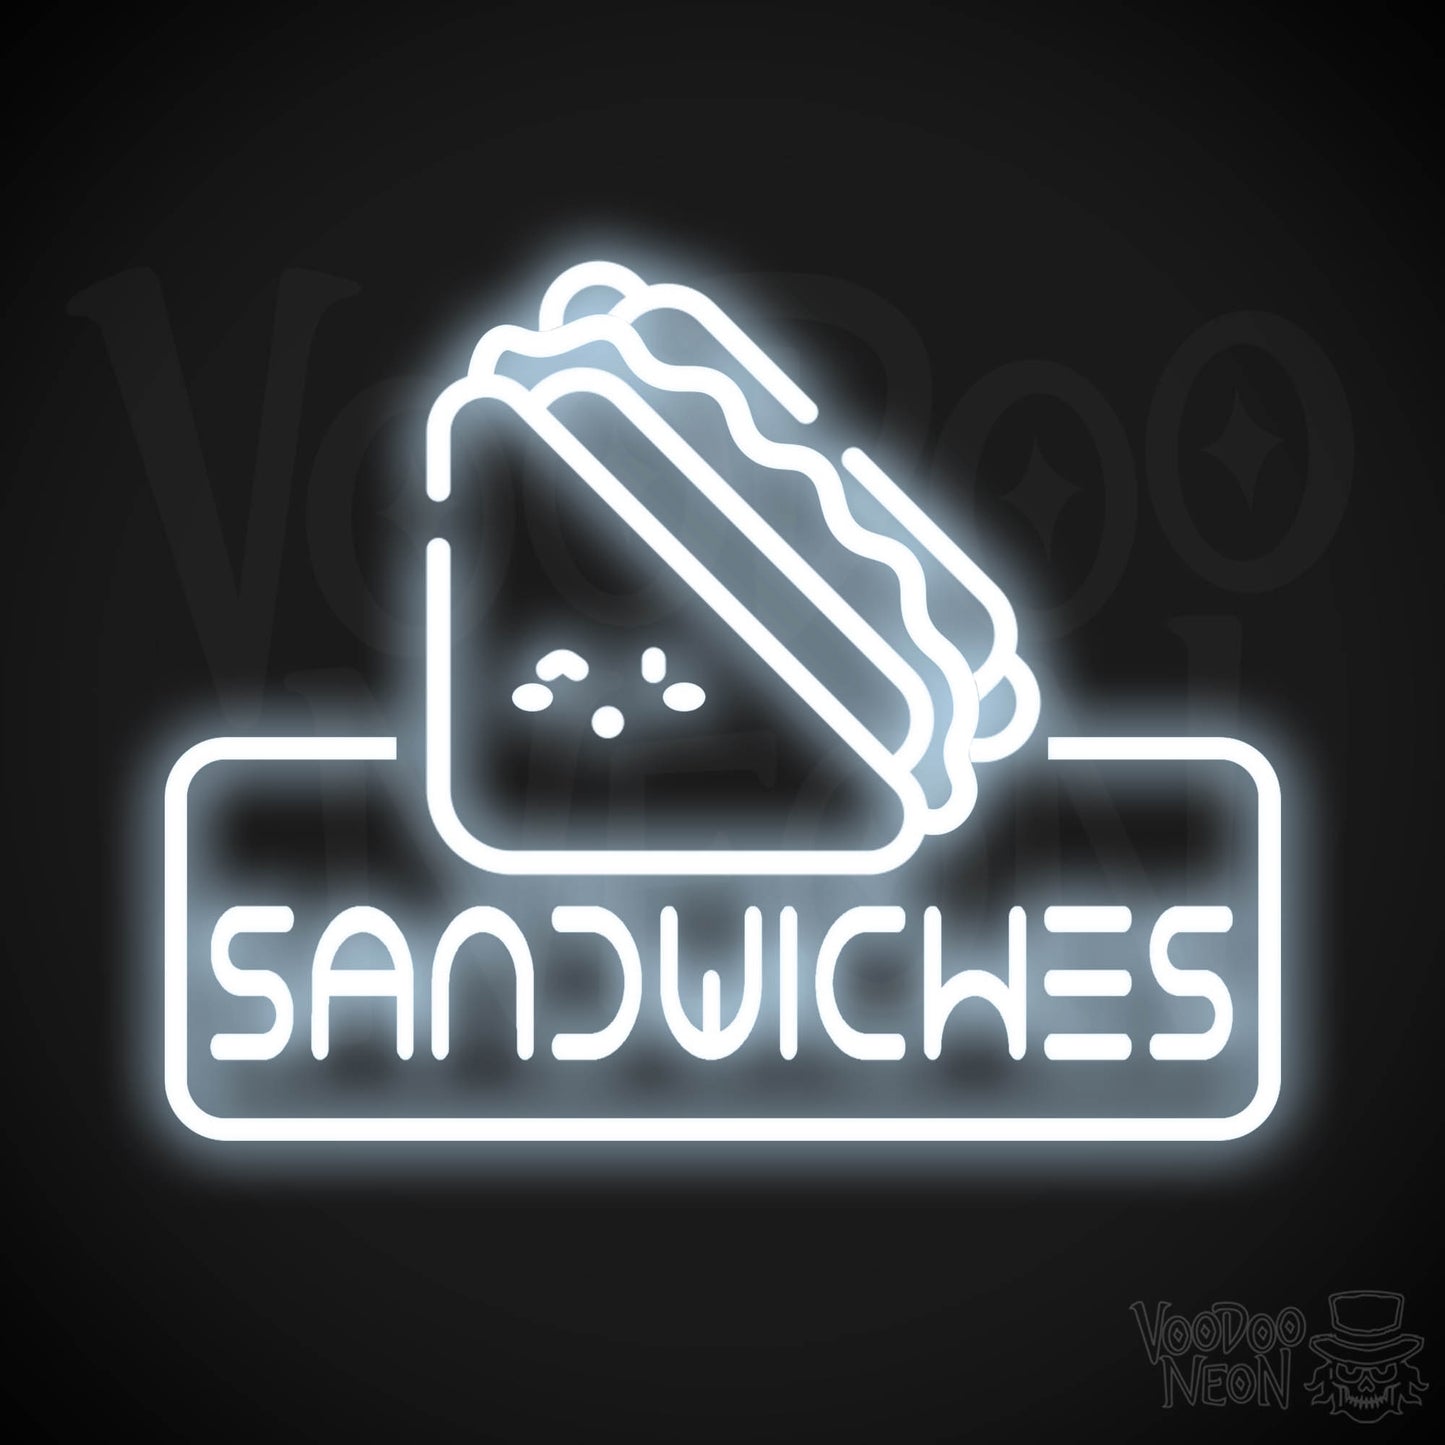 Neon Sandwiches Sign - Sandwich Neon Sign - Neon Sandwich Shop Sign - Color Cool White